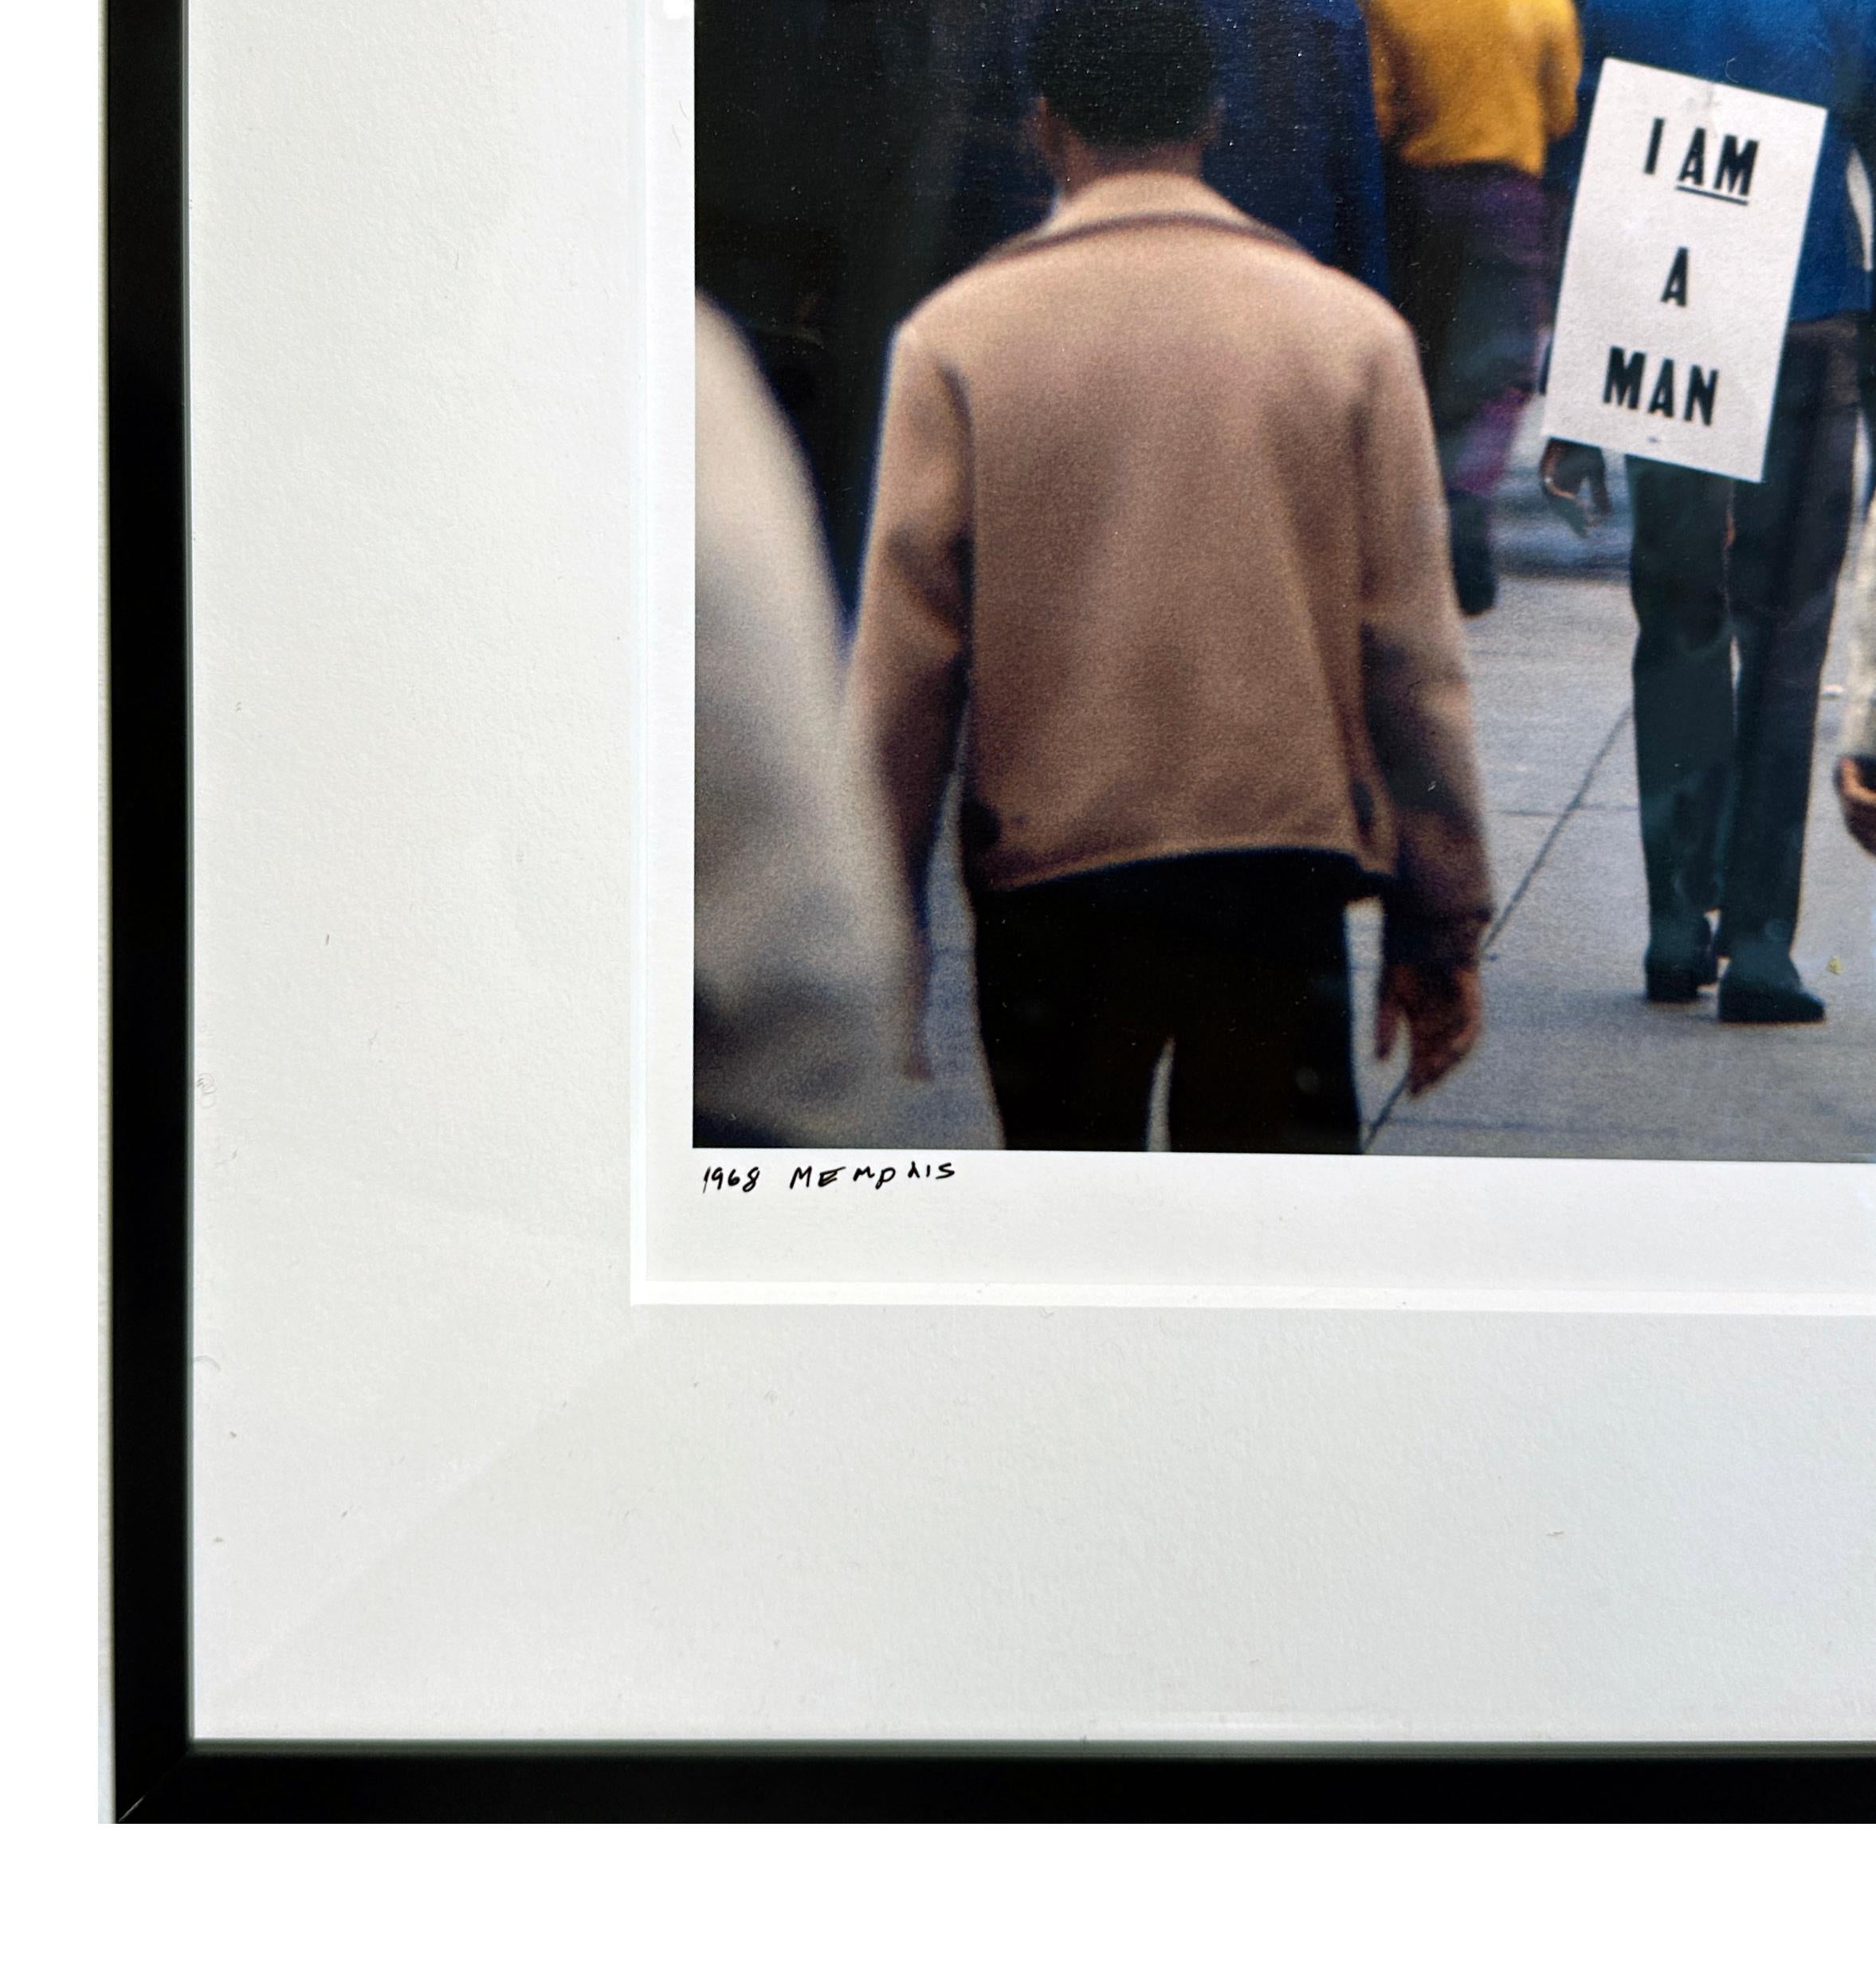 I Am A Man - Color Signed Photograph, 1968 Memphis Sanitation Worker Protest For Sale 1